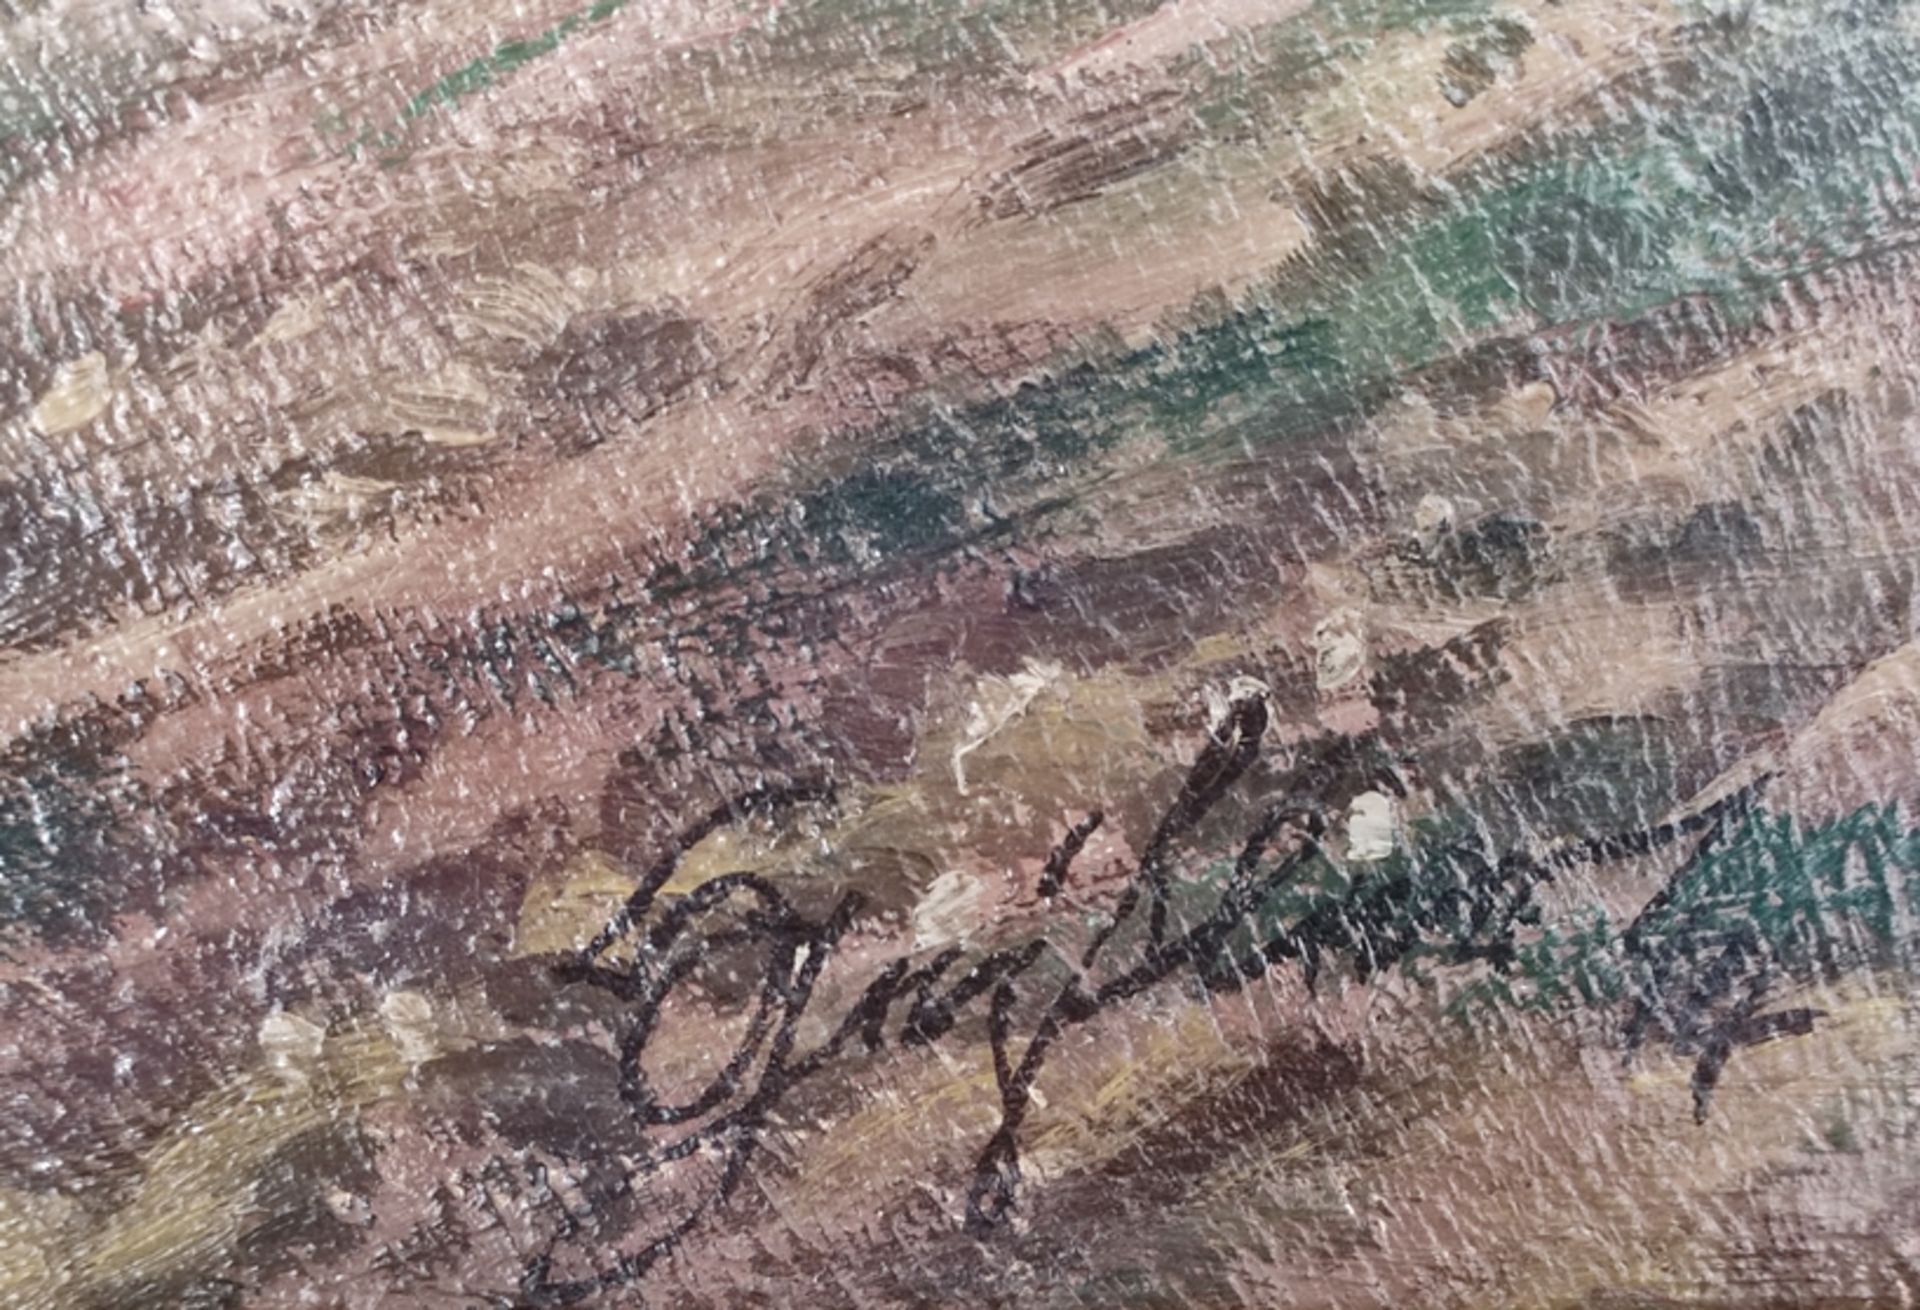 Geißler, Hugo (1895-1956 Tuttlingen) "Donautal", Öl auf Platte, rechts unten signiert, (19)44 datie - Bild 3 aus 4